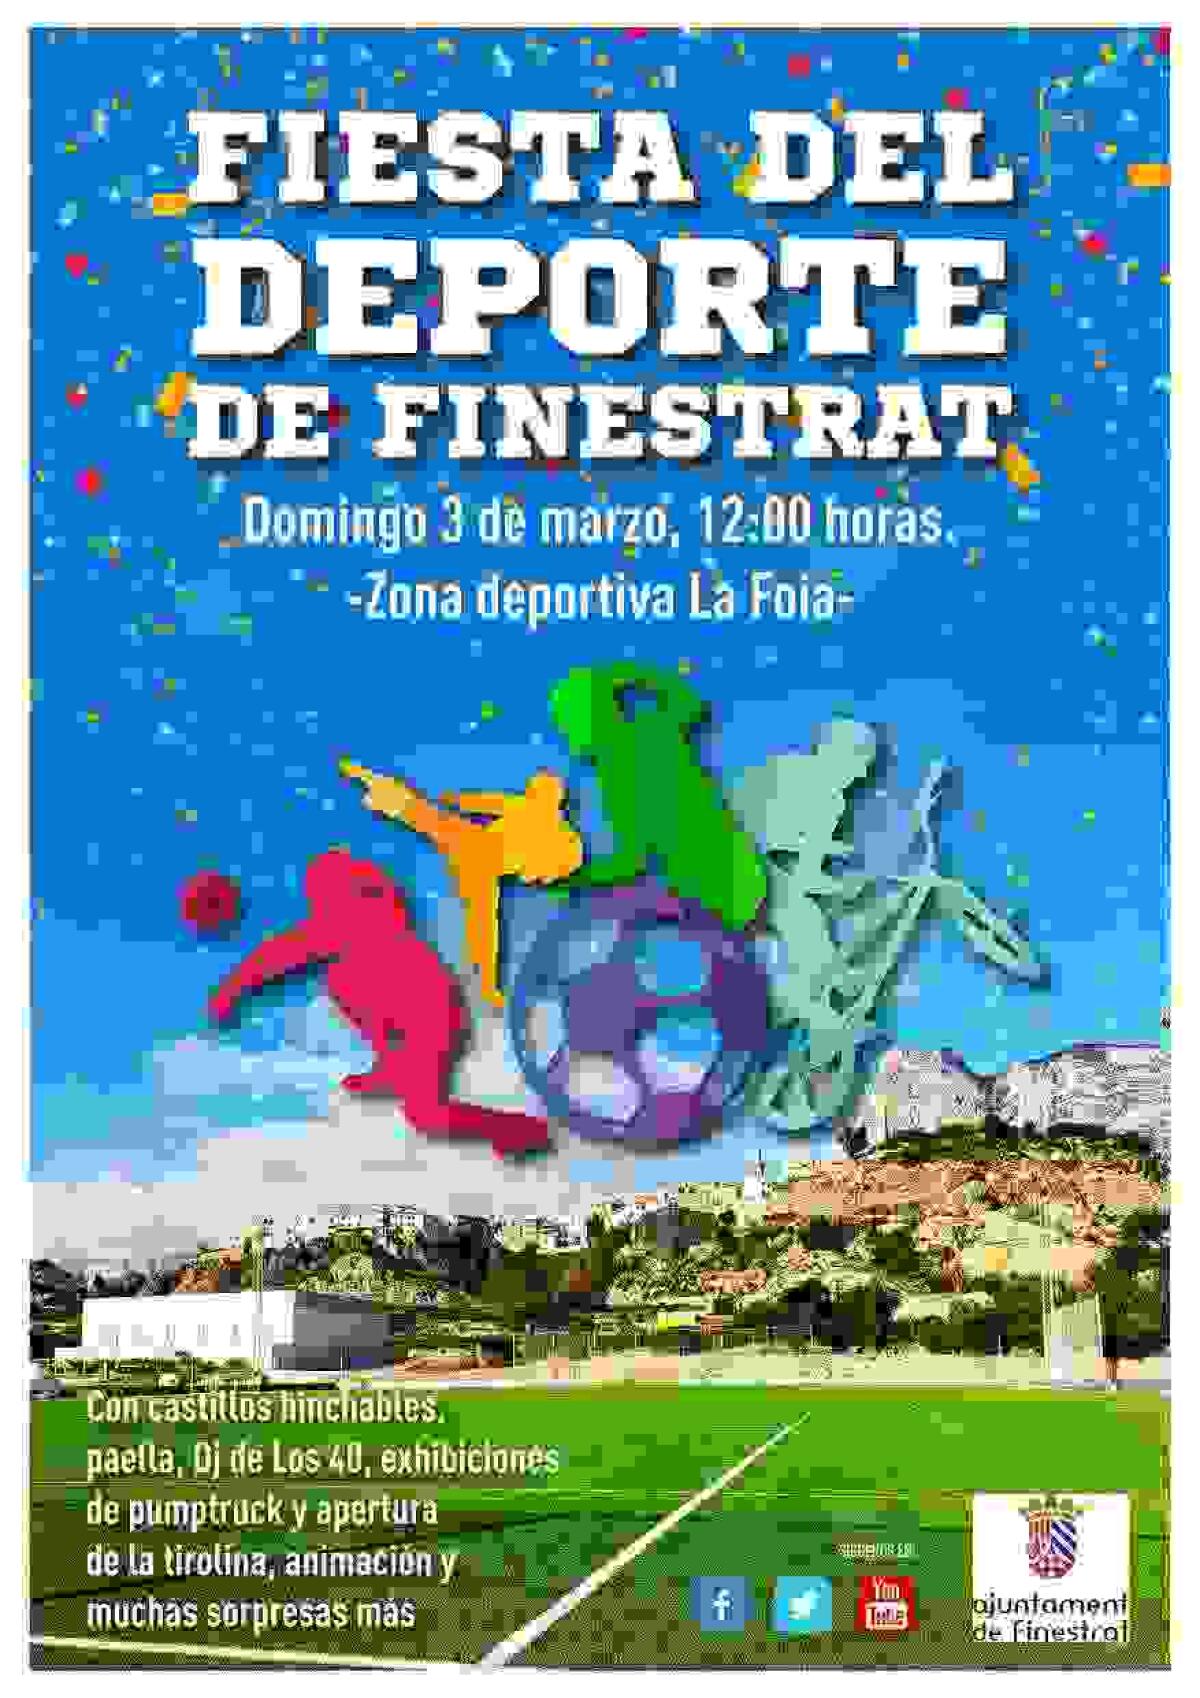 Finestrat celebra la Fiesta del Deporte el domingo 3 de marzo en la zona deportiva de la Foia